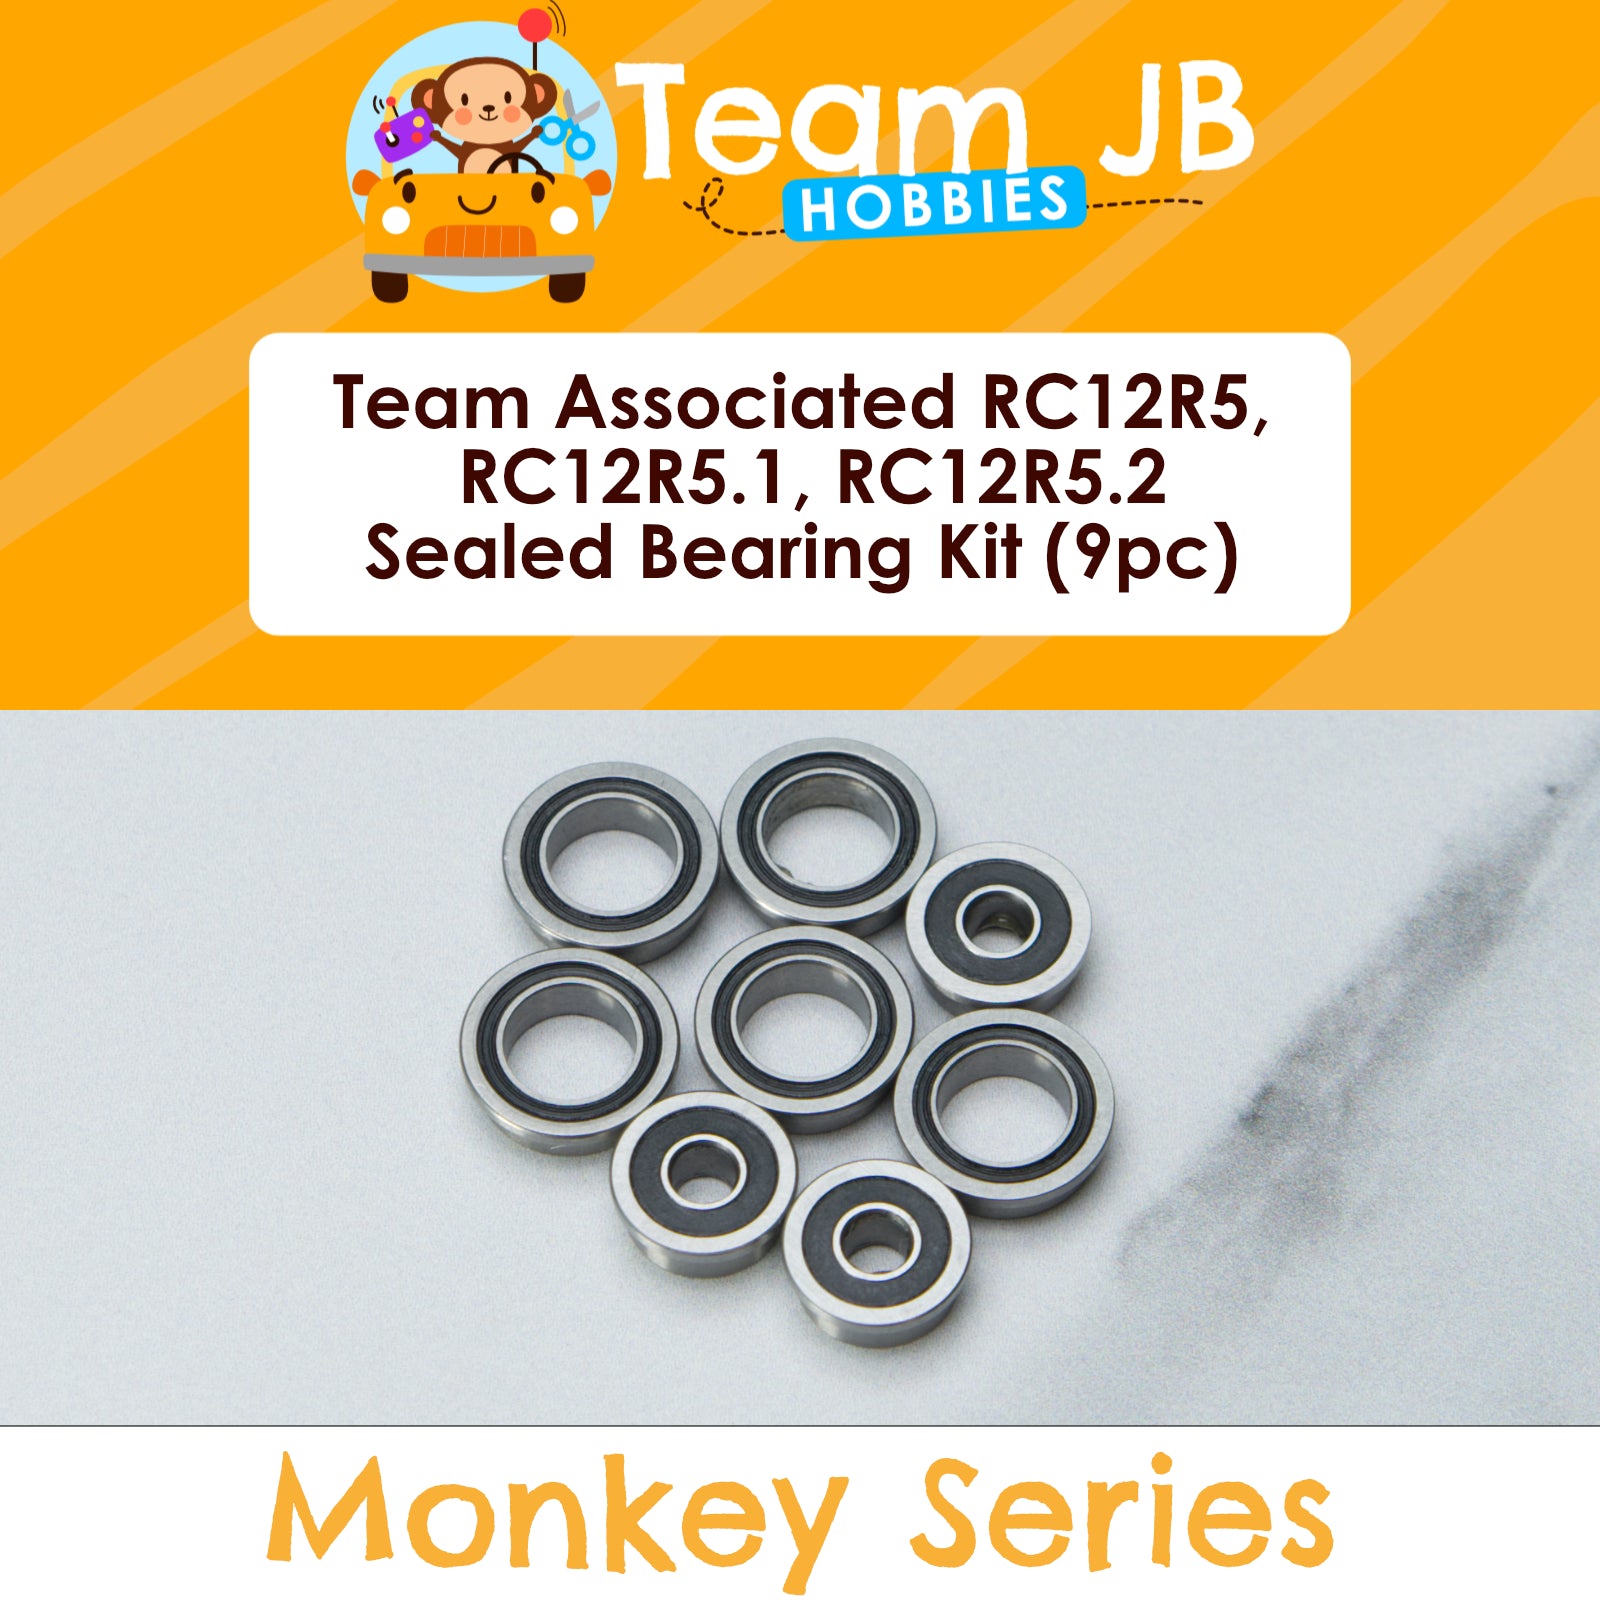 Team Associated RC12R5, RC12R5.1, RC12R5.2 - Sealed Bearing Kit